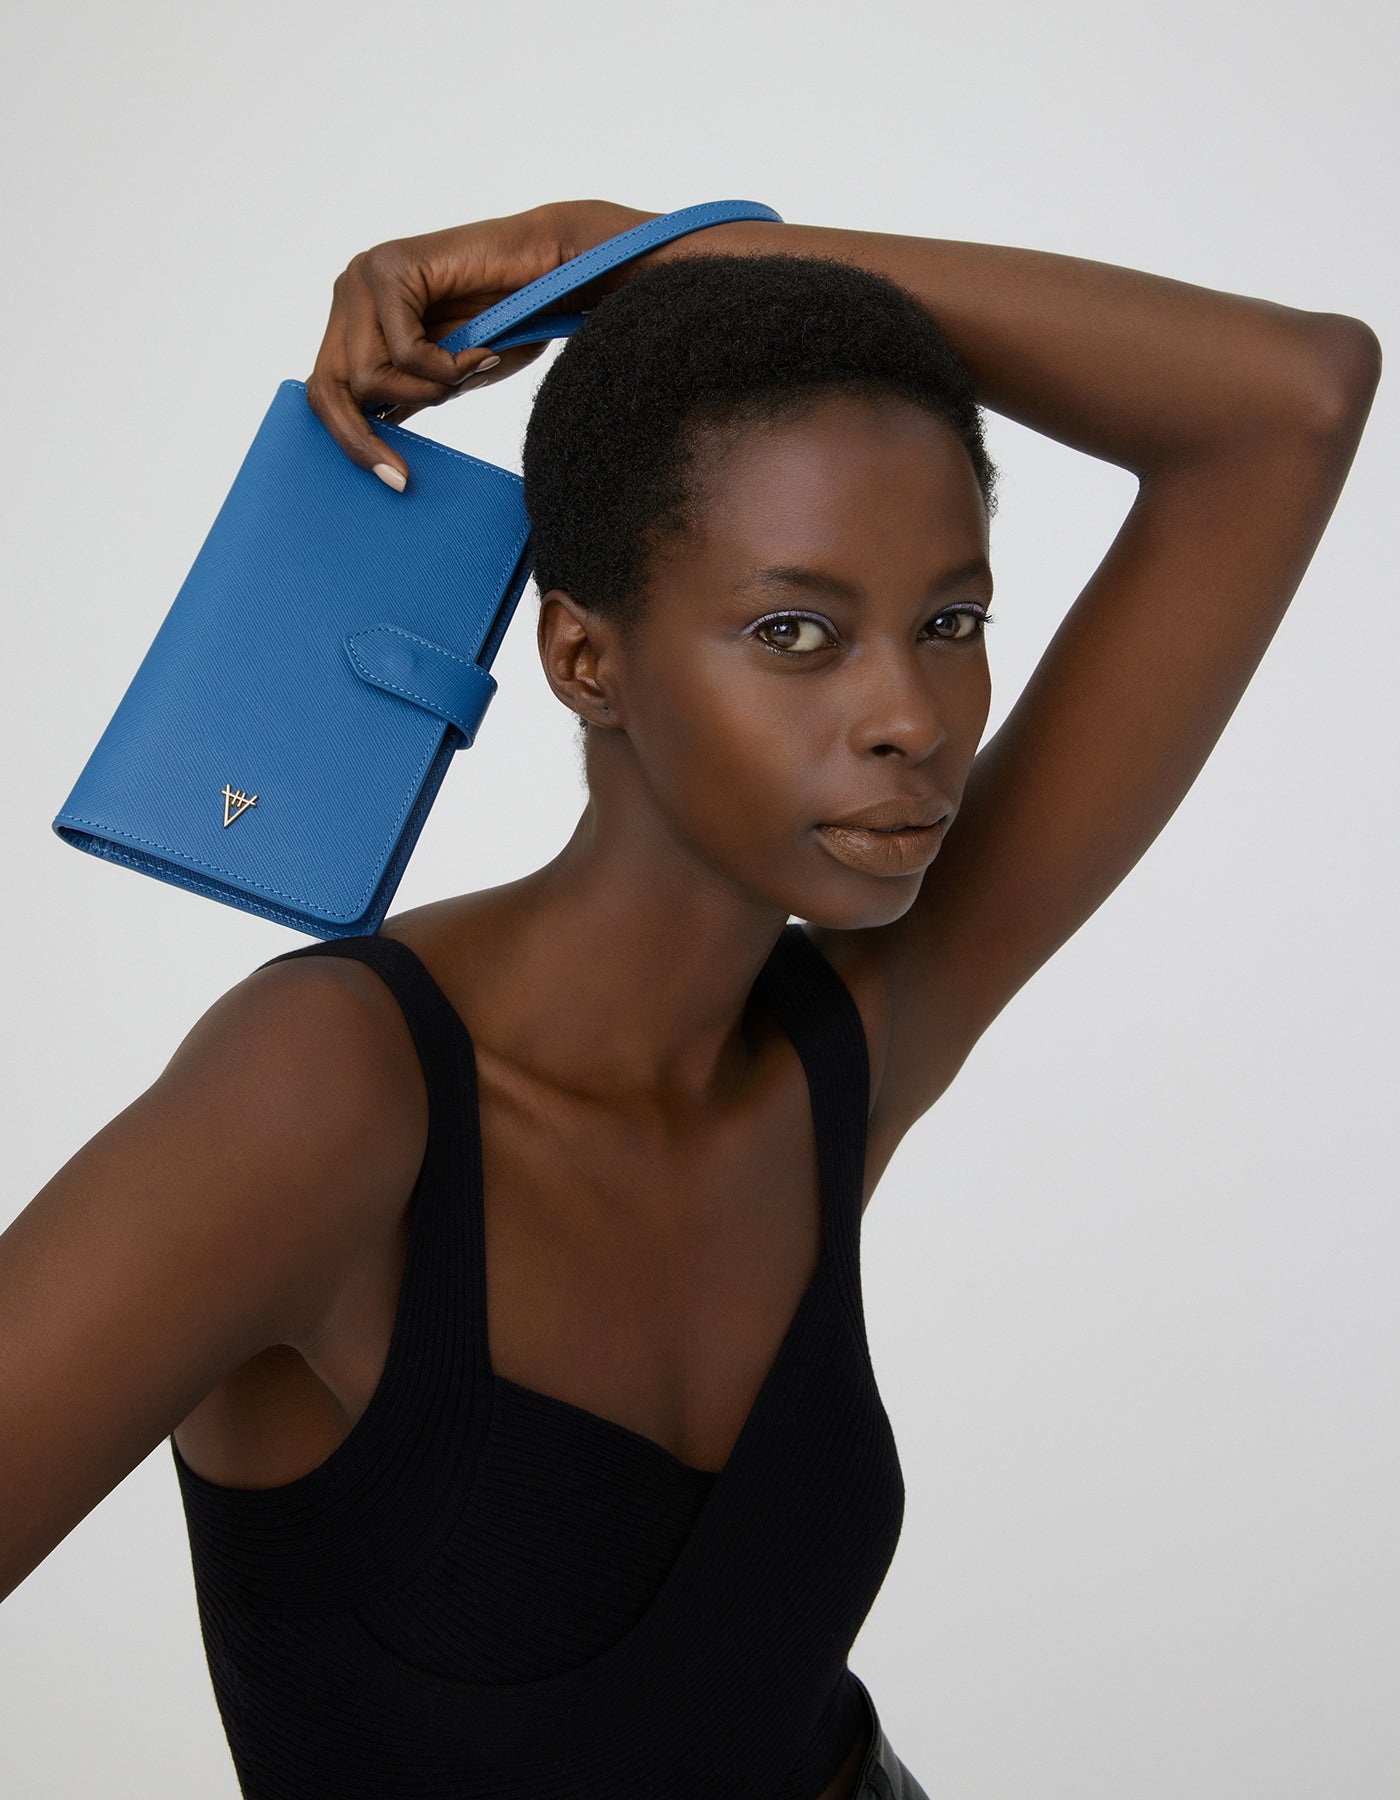 HiVa Atelier | Ita Crossbody Bag and Wallet Blue Sapphire | Beautiful and Versatile